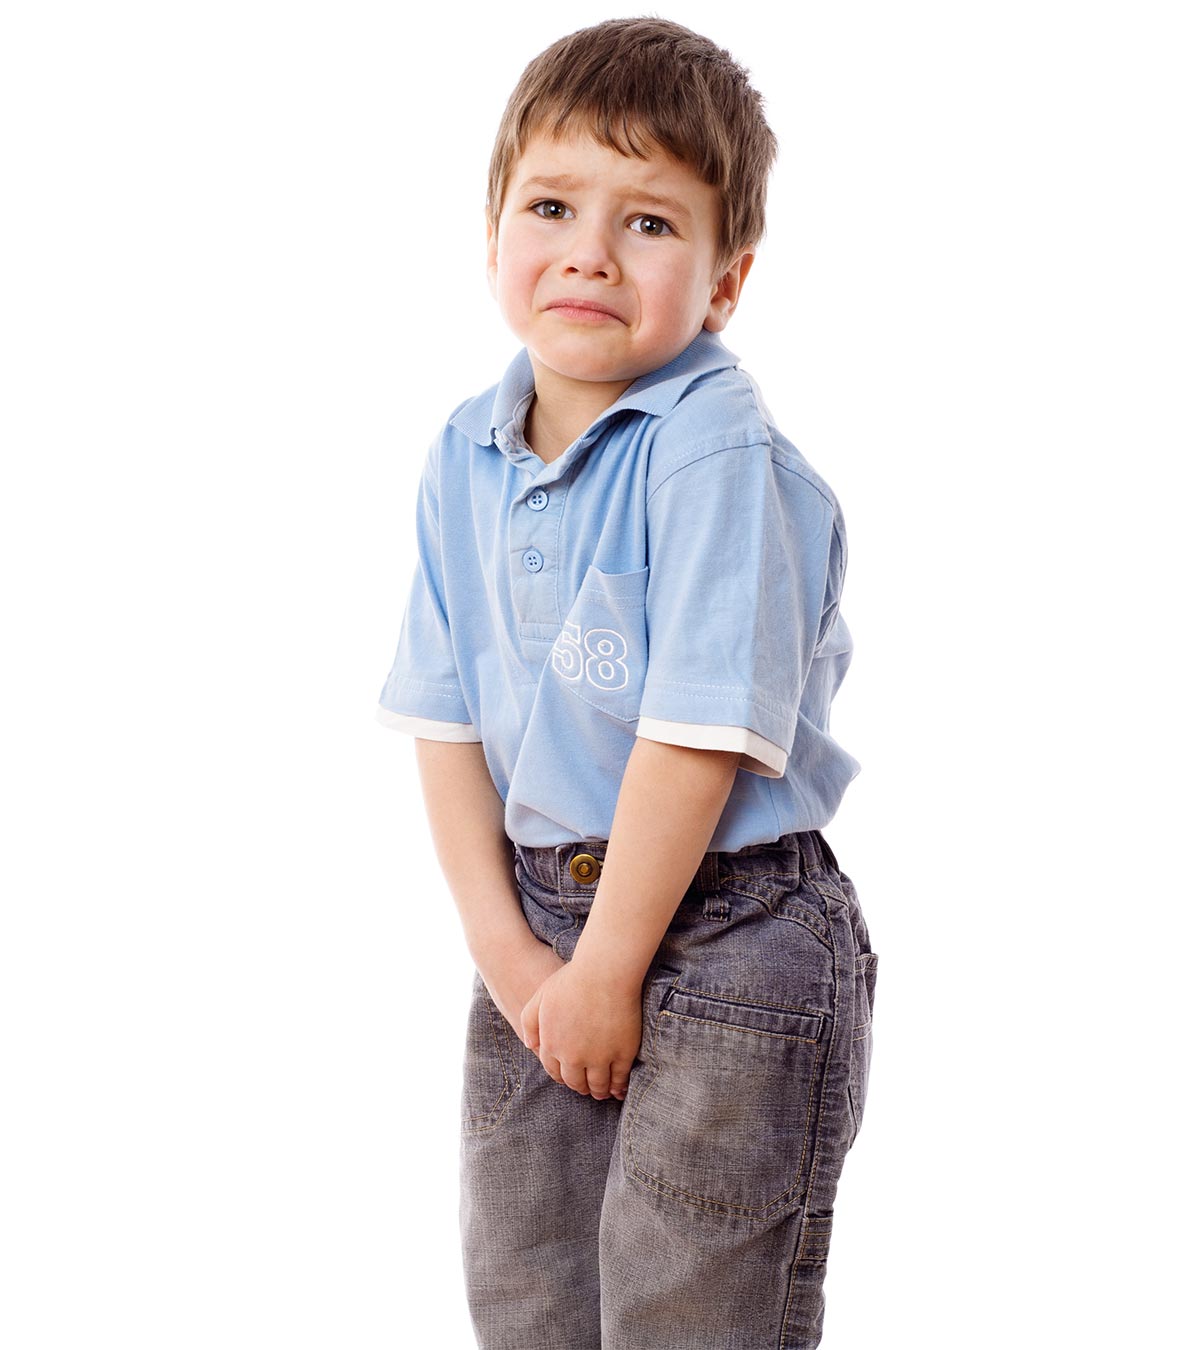 Frequent Urination (Pollakiuria) In Kids: Symptoms & Treatment